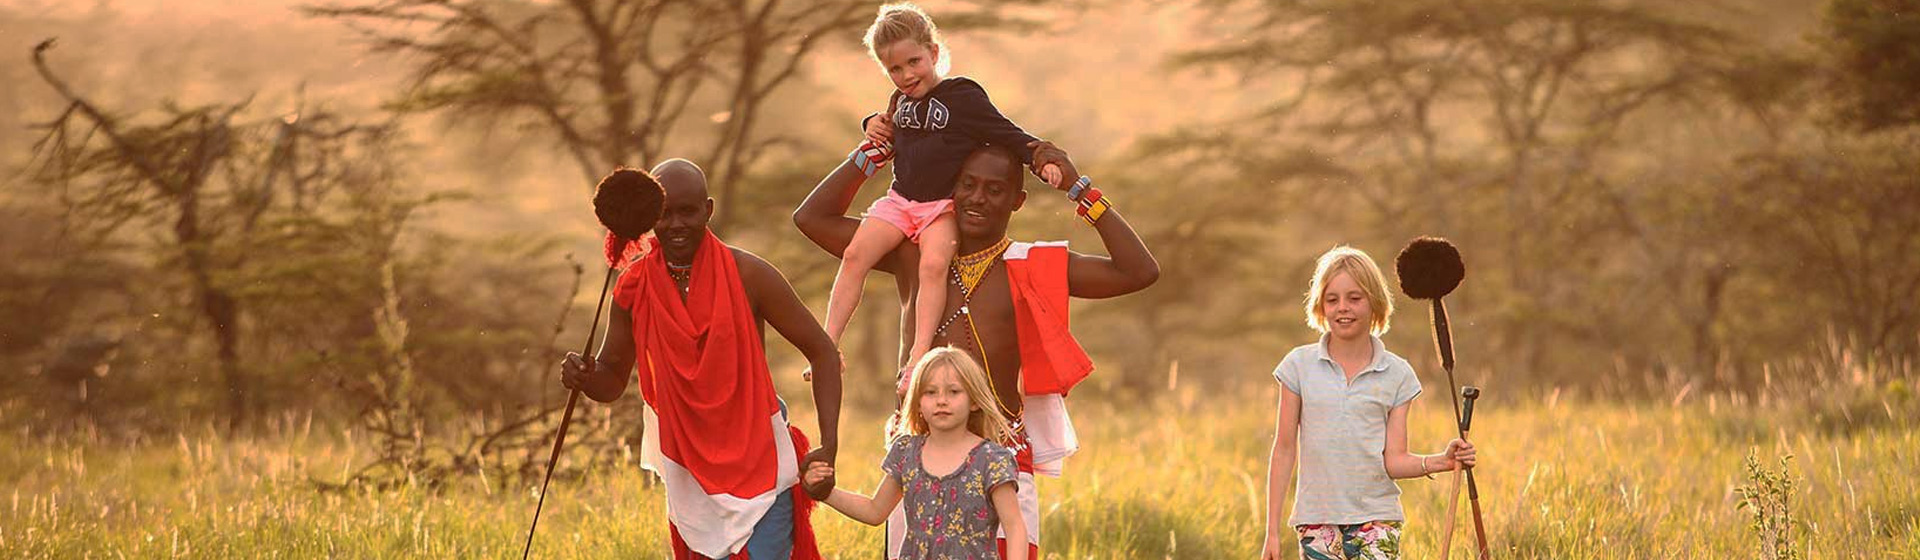 8 Days Kenya Family Safari